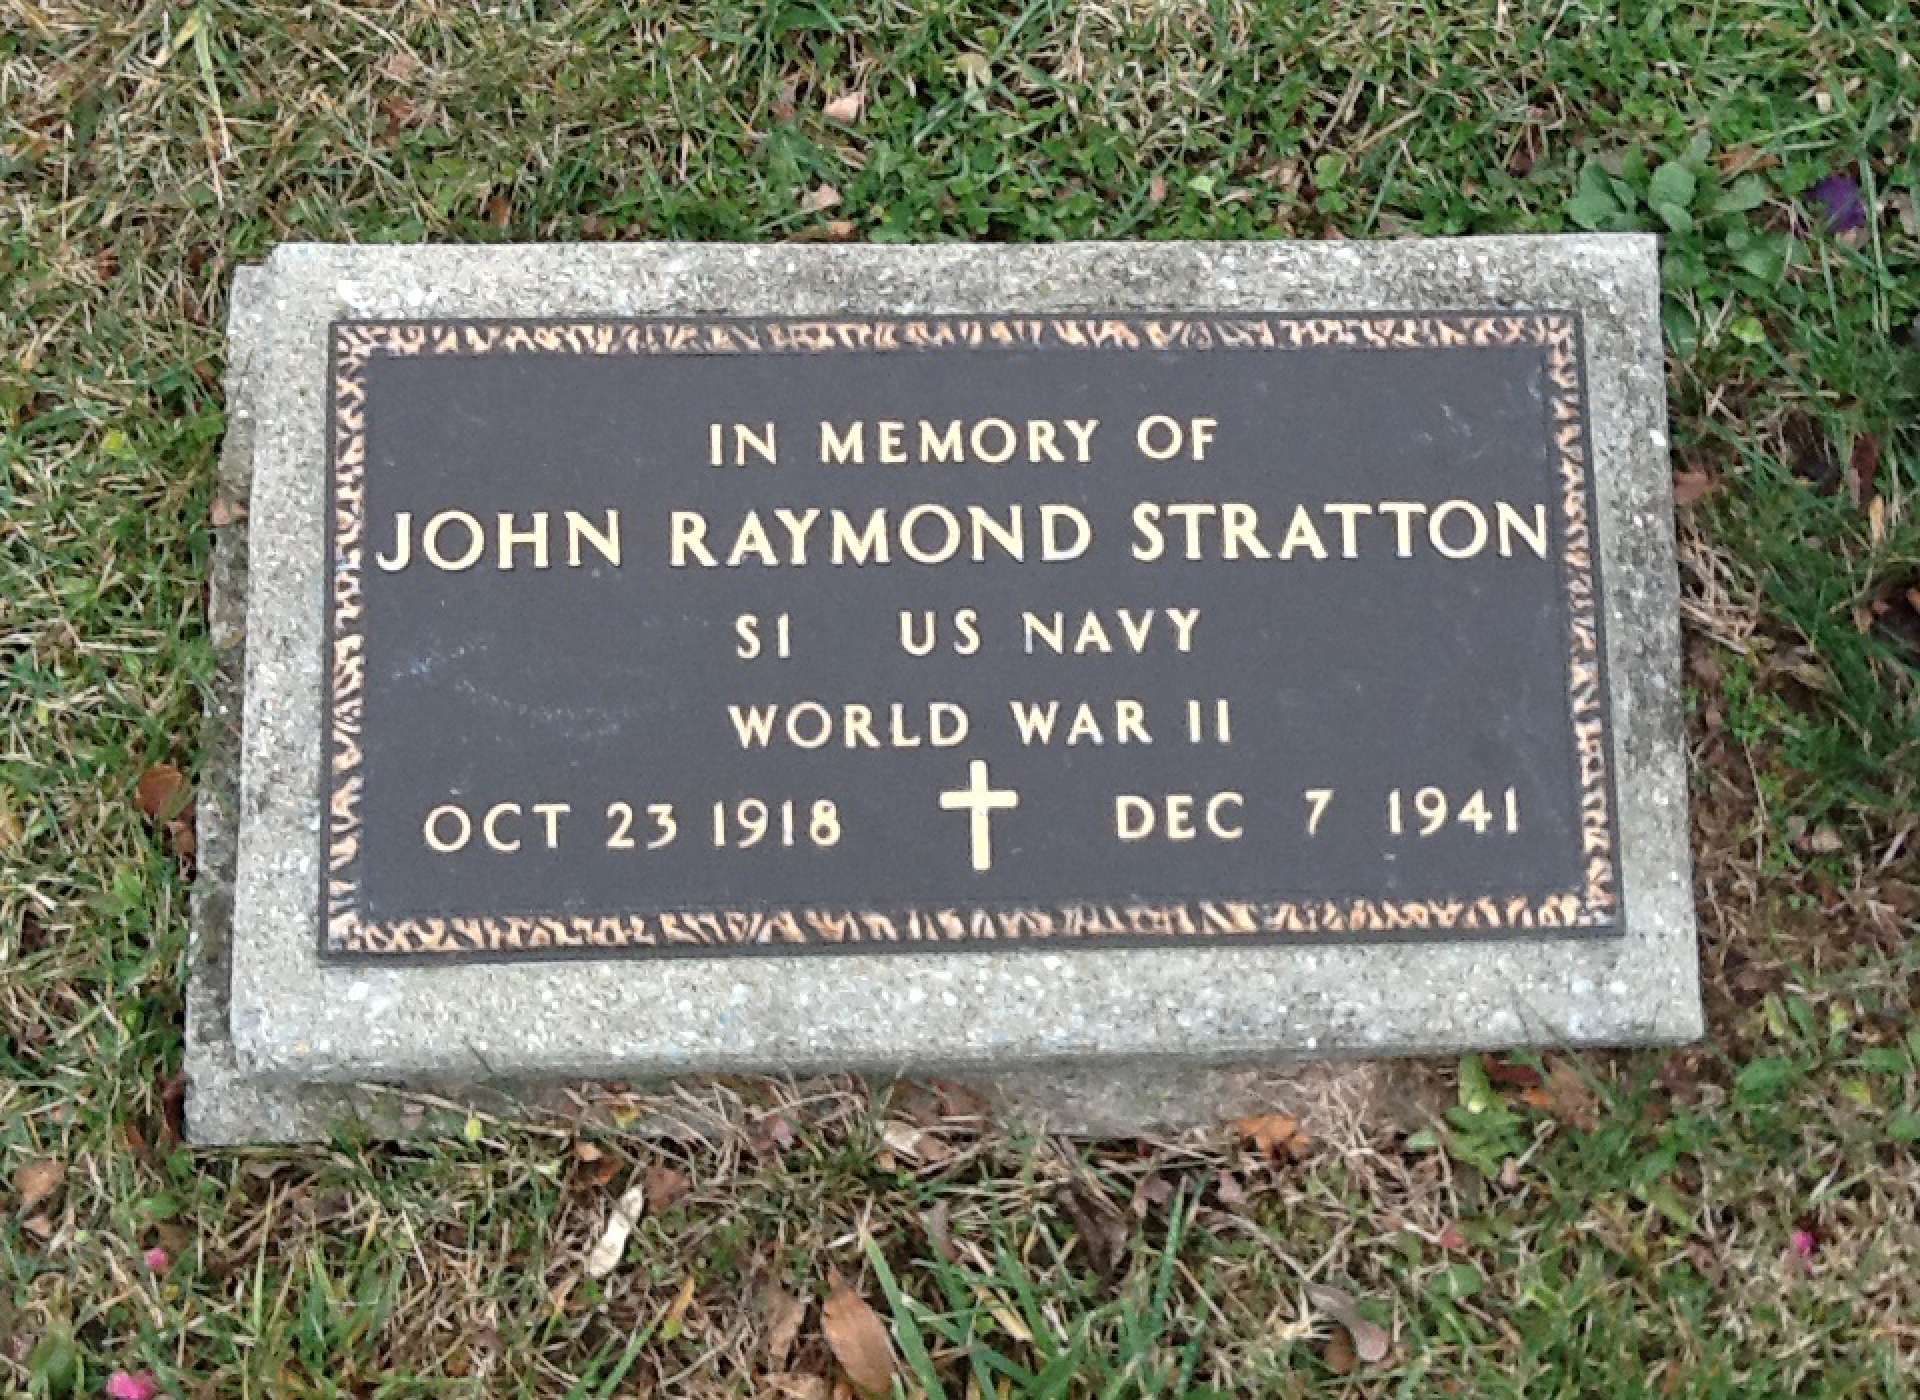 John Raymond Stratton’s tombstone, courtesy of the Edens family